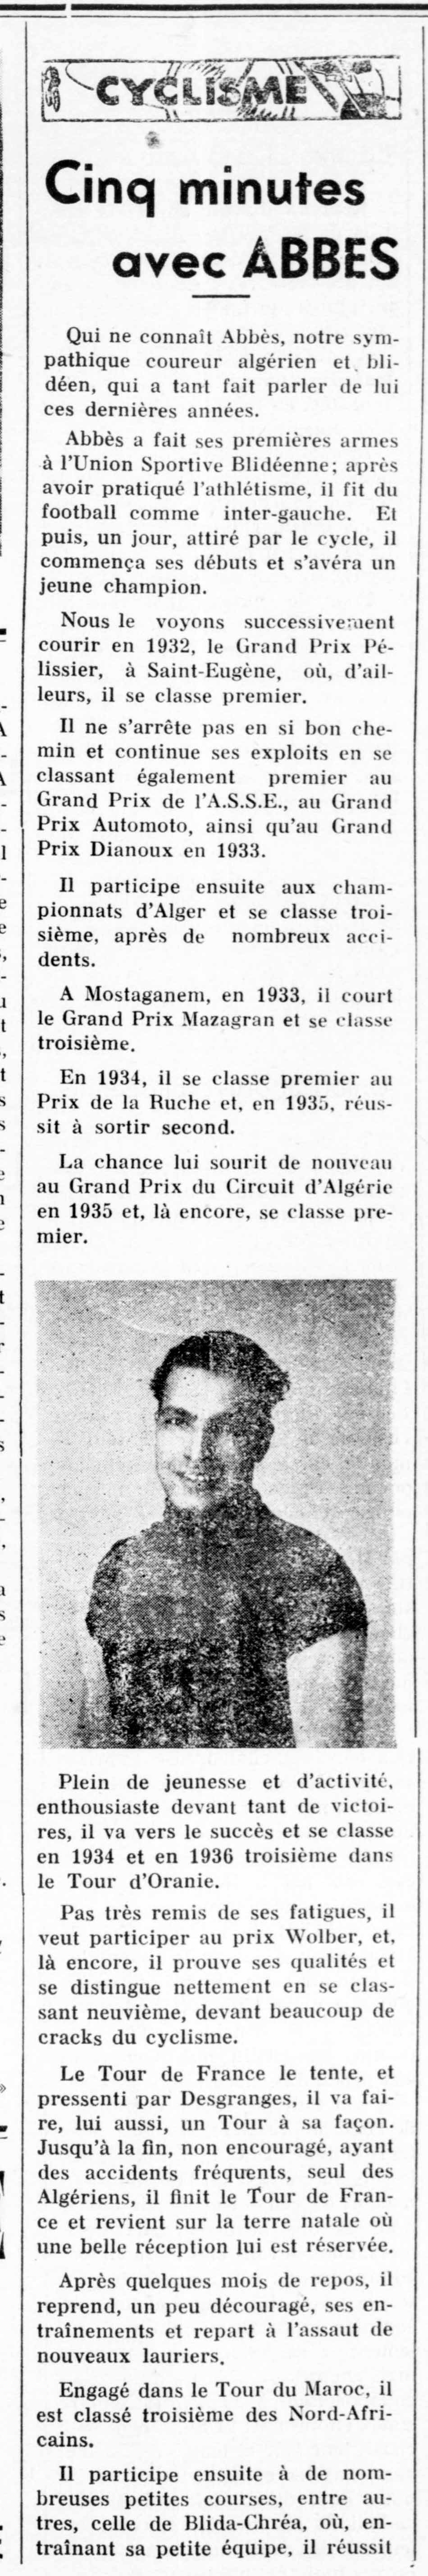 La_Province_sportive_1937-10-07-abbes.jpg